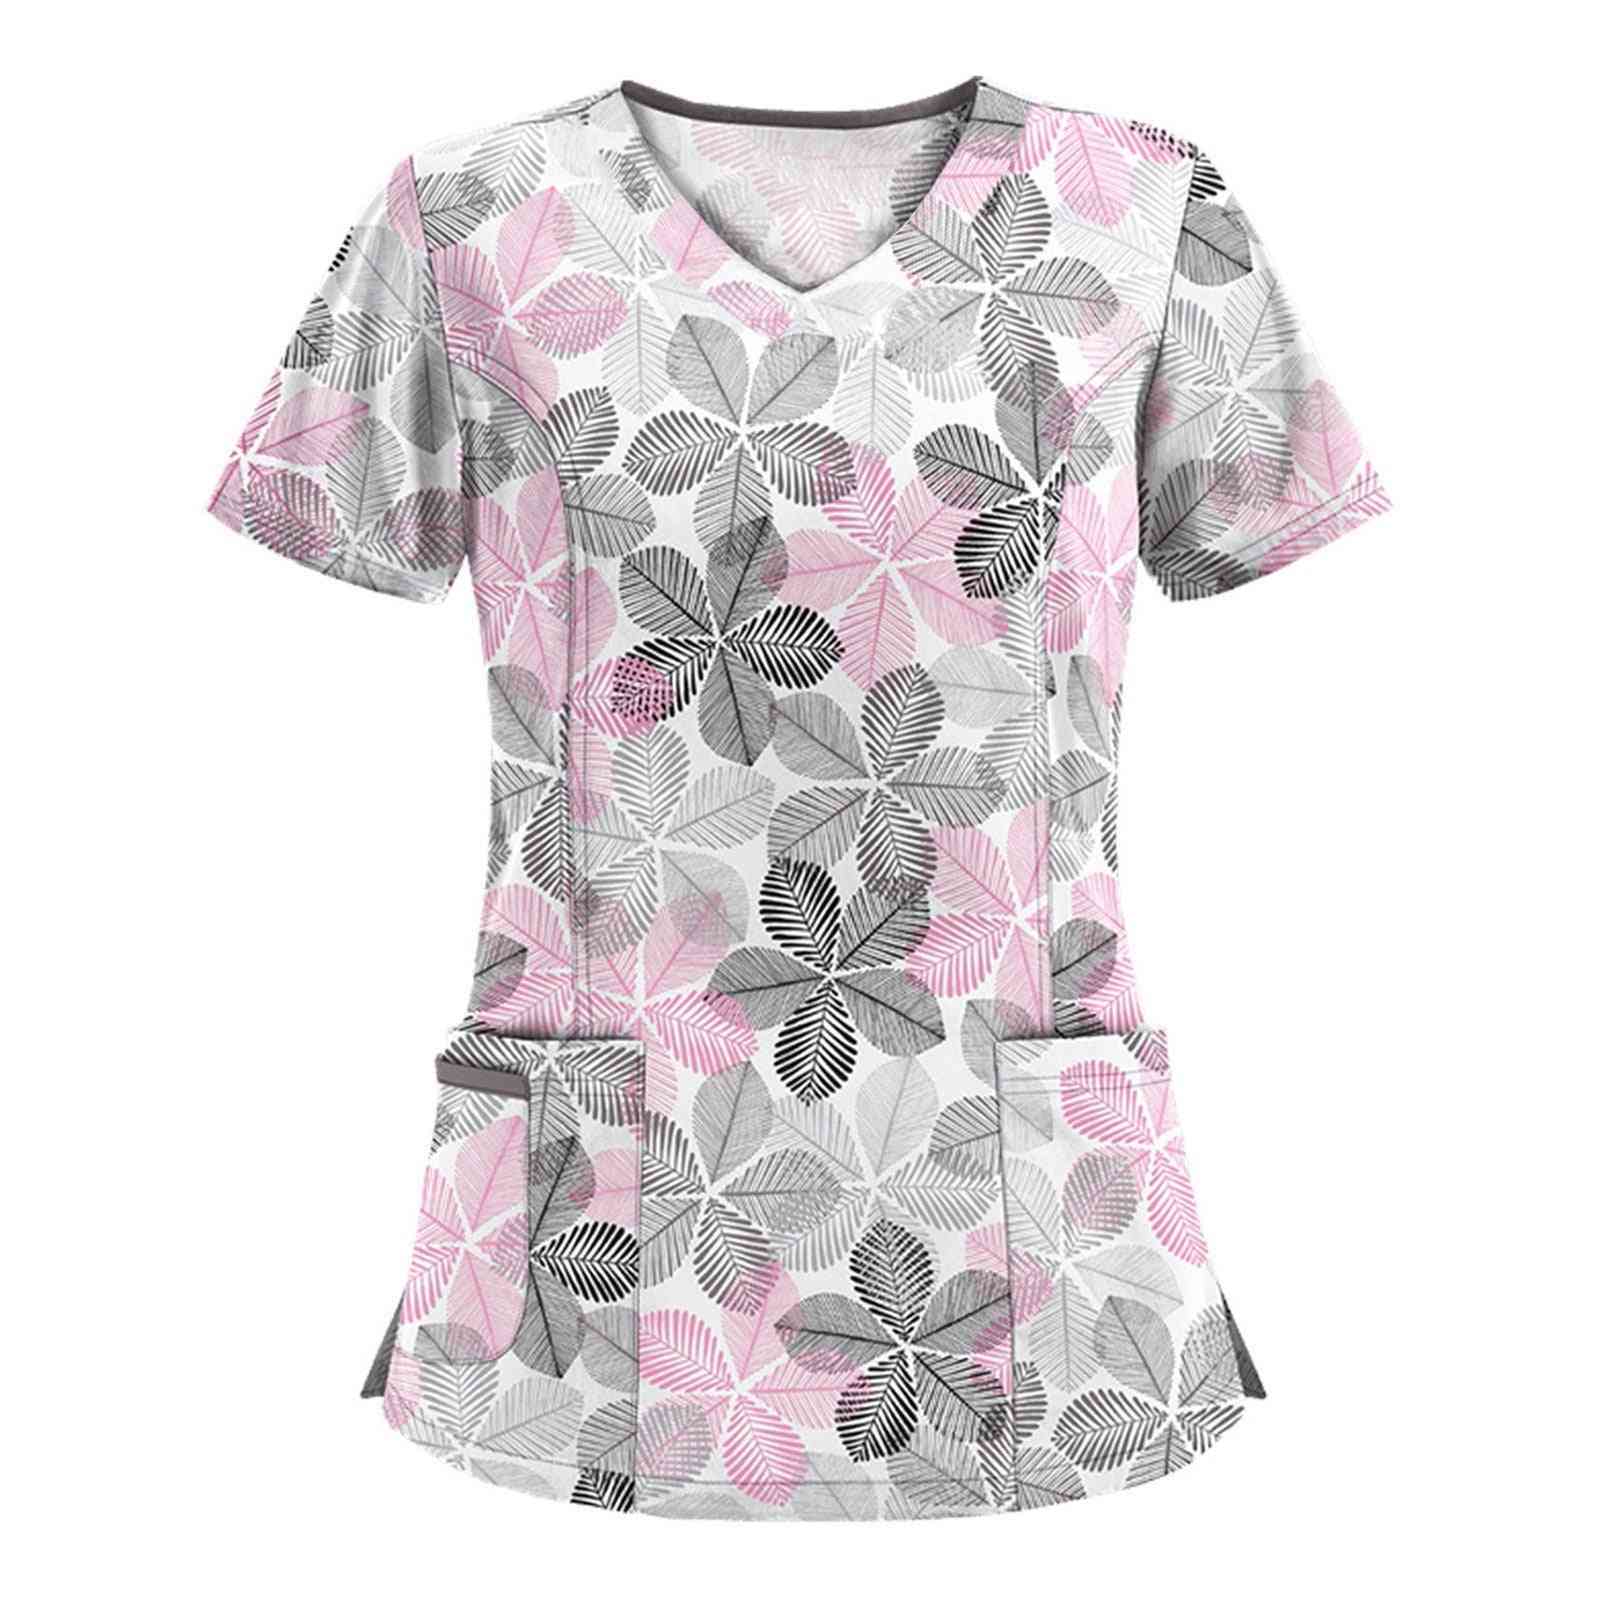 Floral Print- Scrubs Cartoon, Short Sleeve, Nurse Uniform, Scrubs Tops